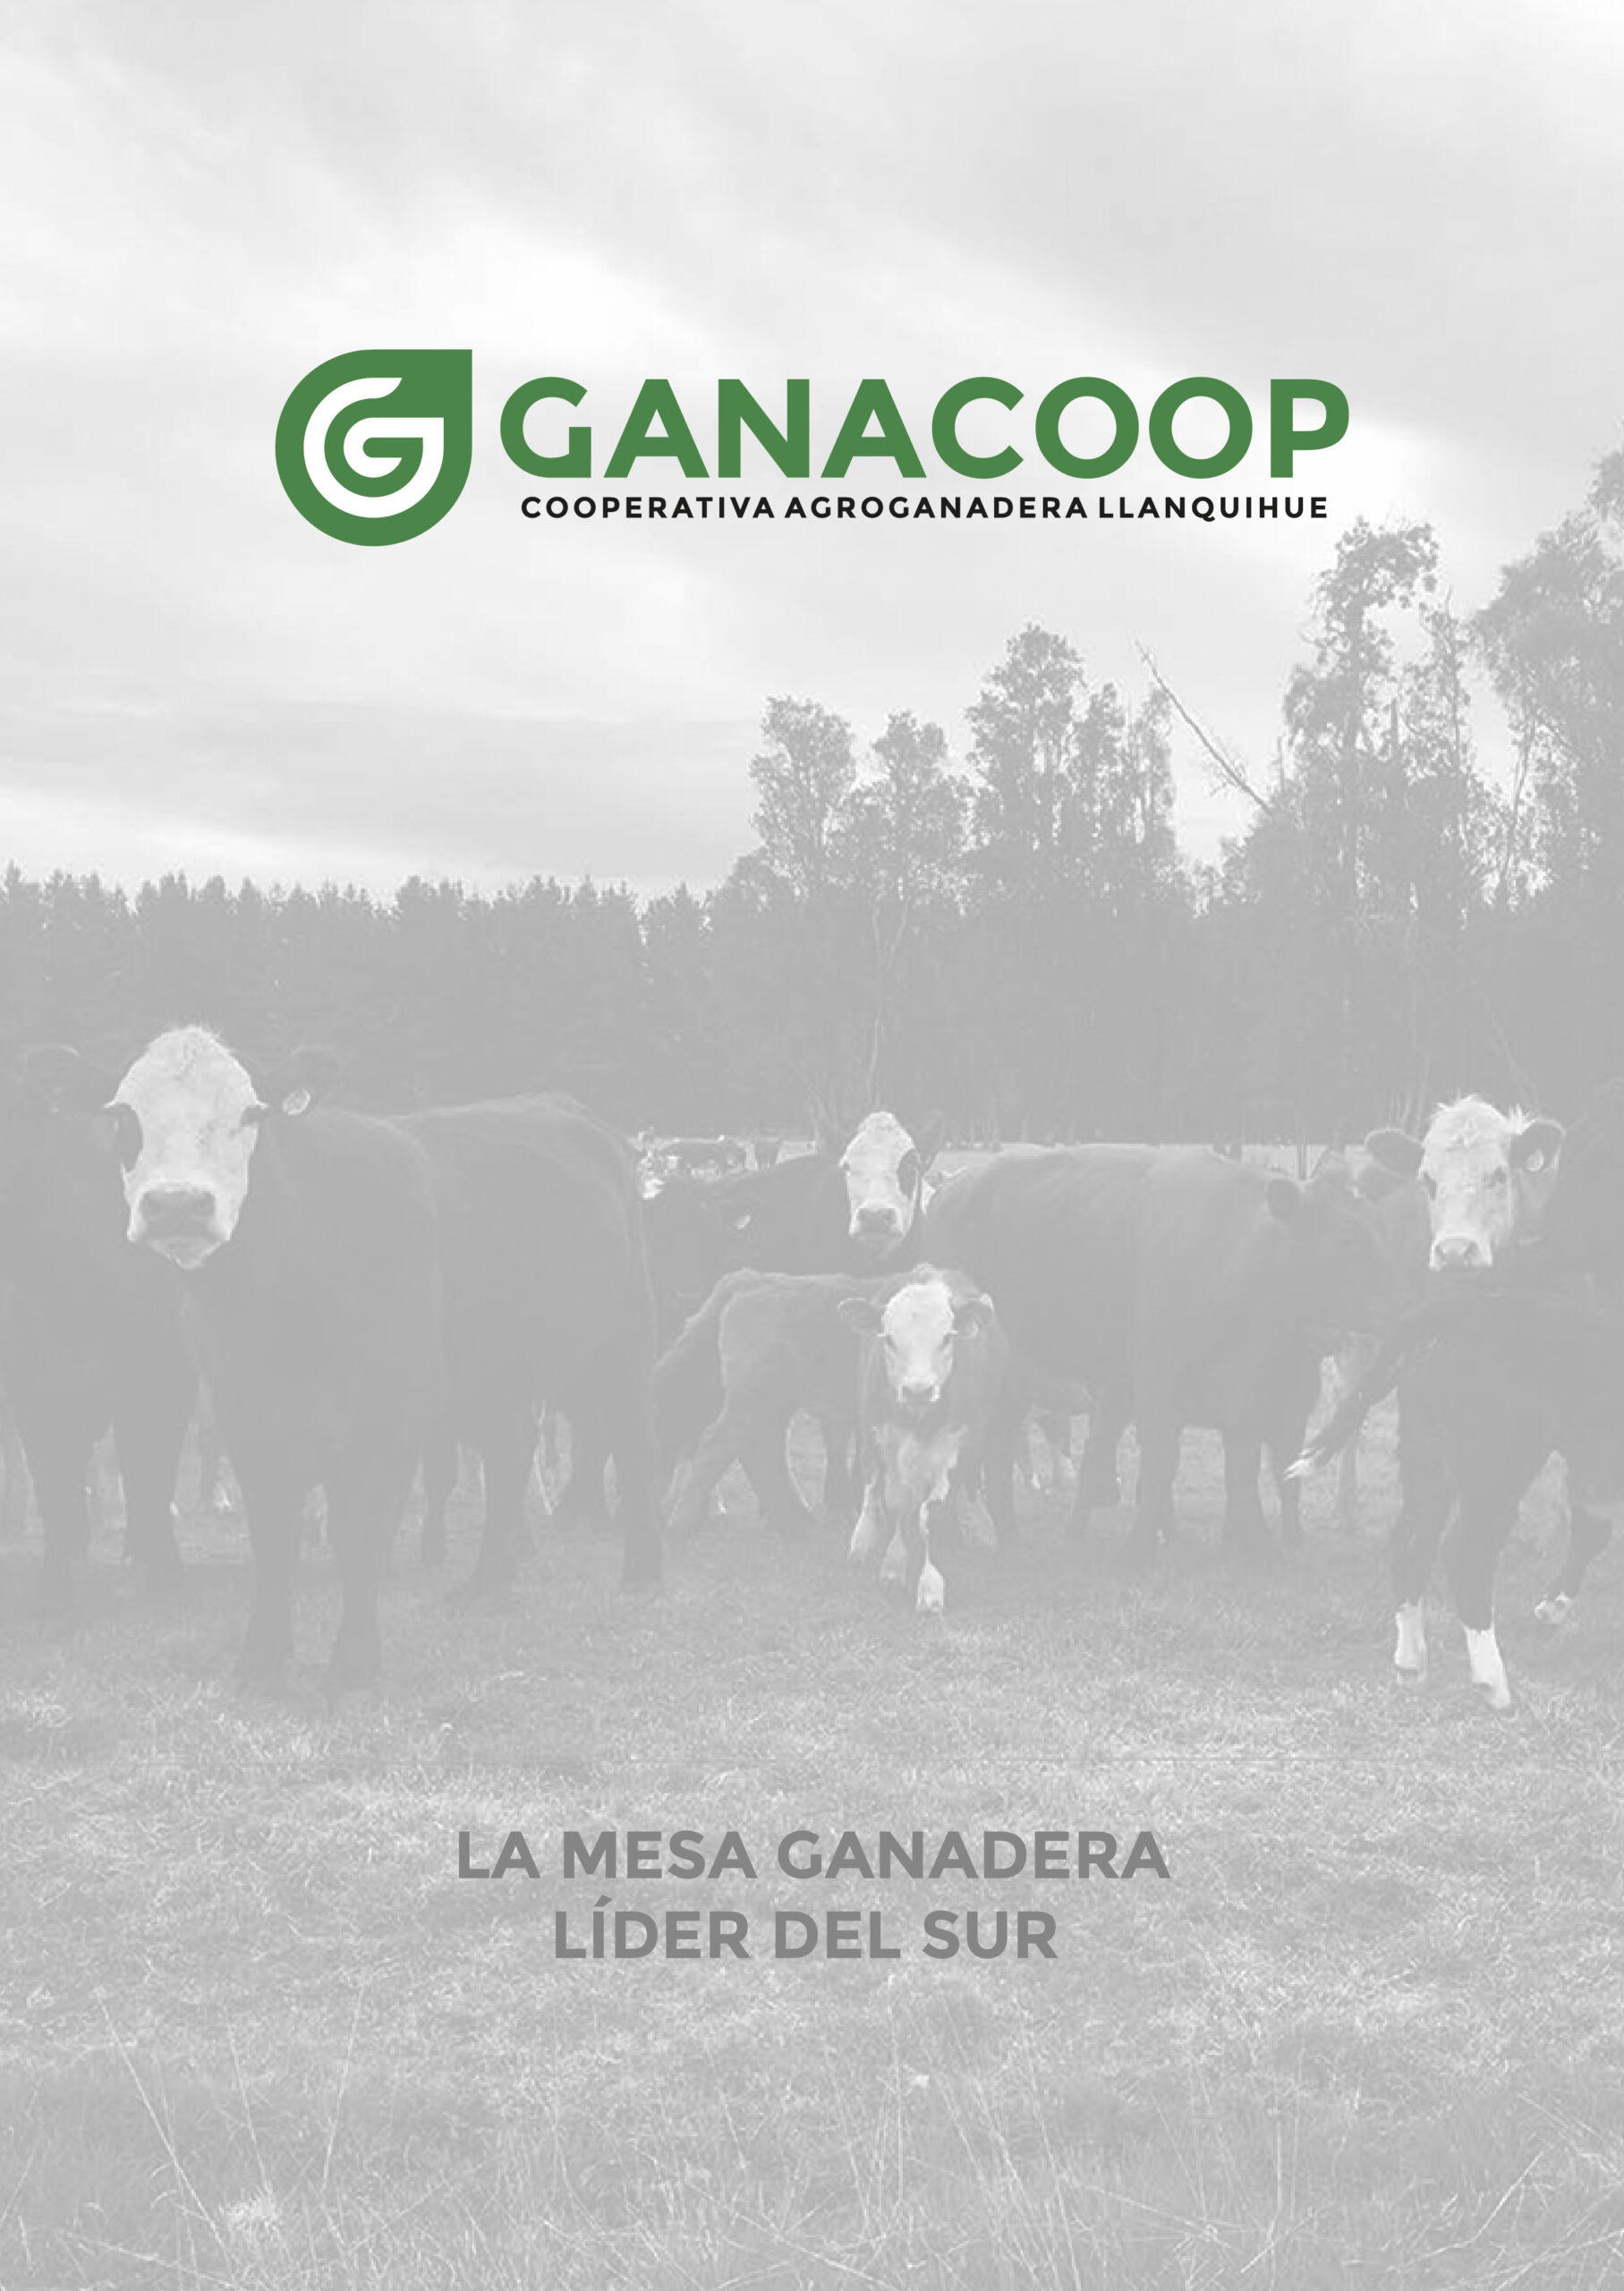 Doctor Marketing | GANACOOP scaled